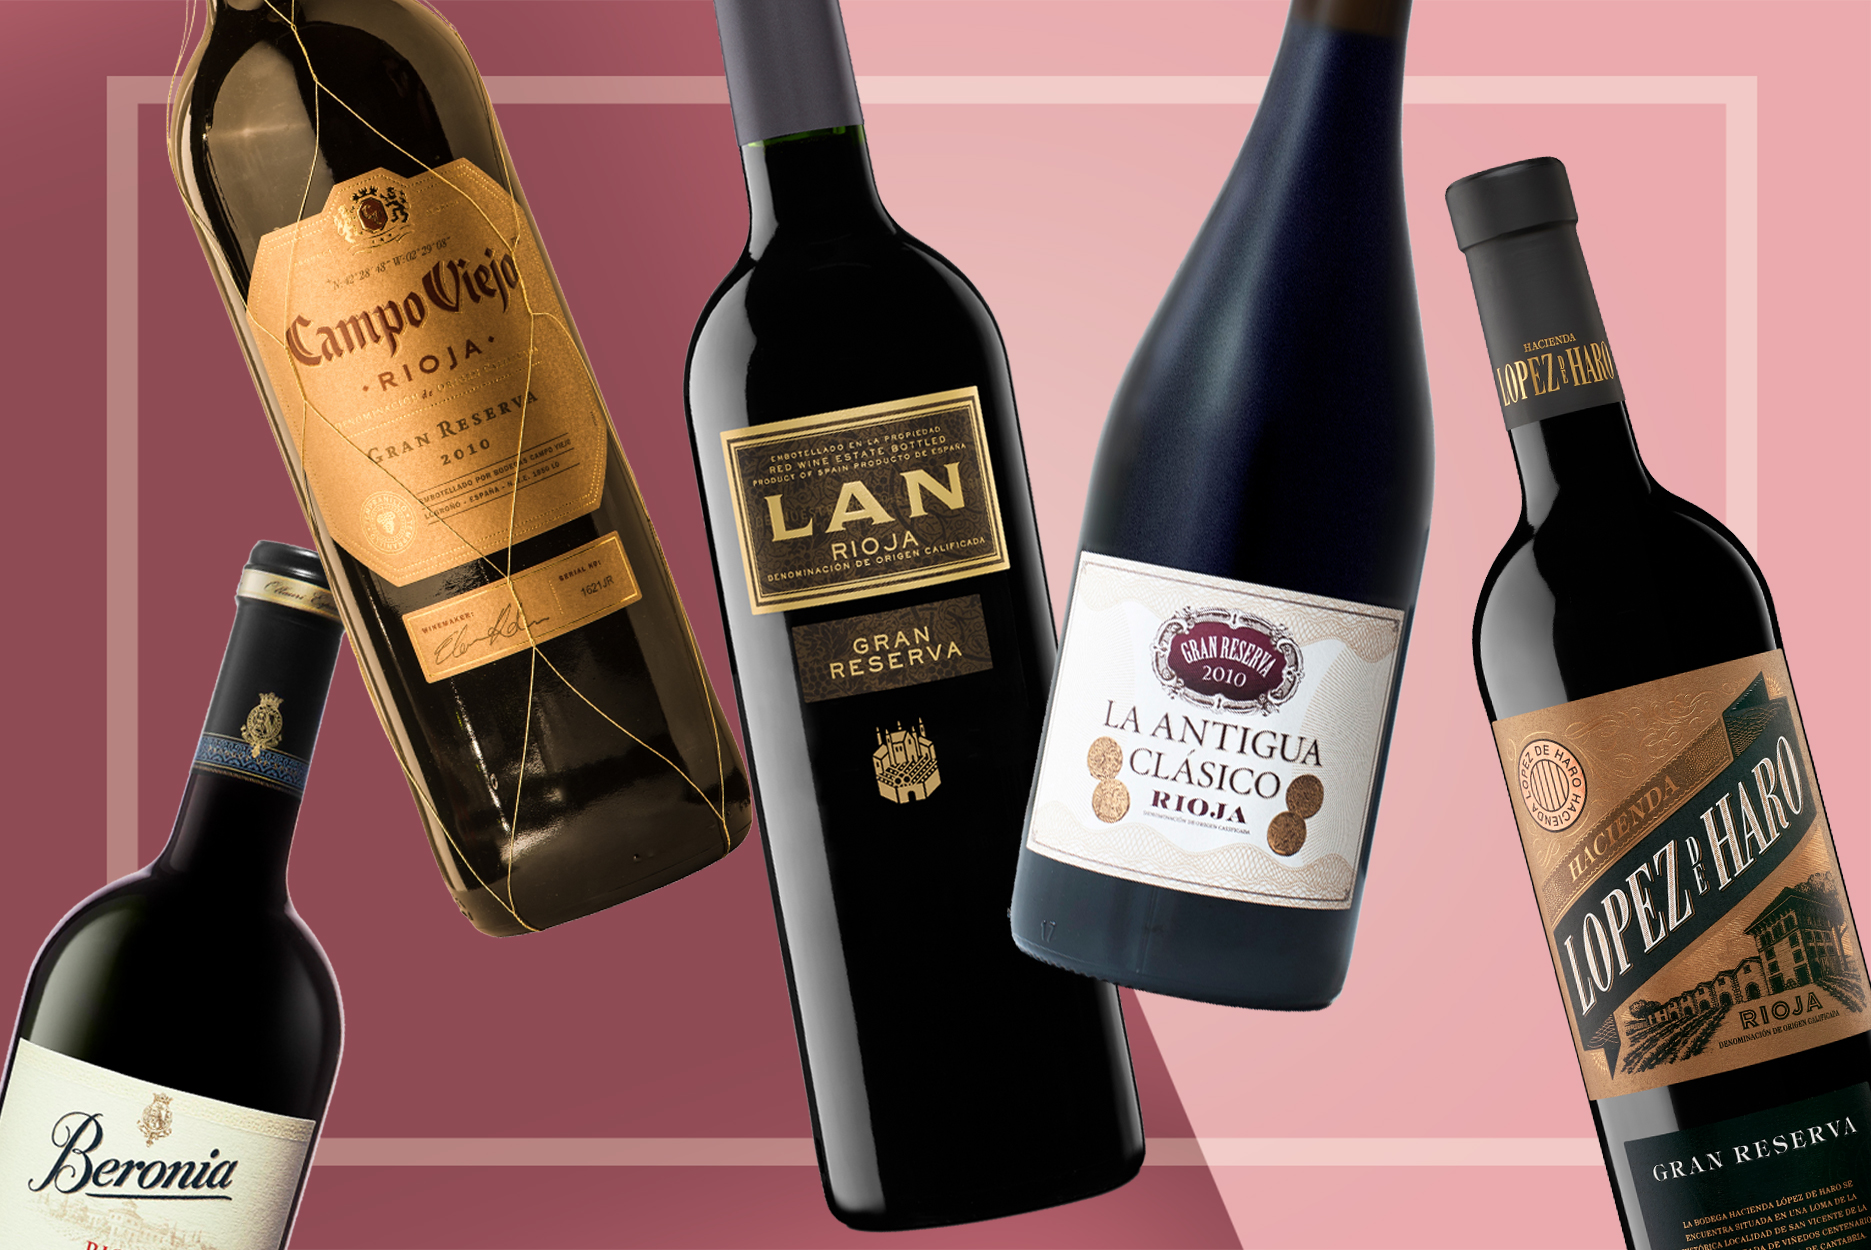 Food & Wine Magazine Features Rioja Wines